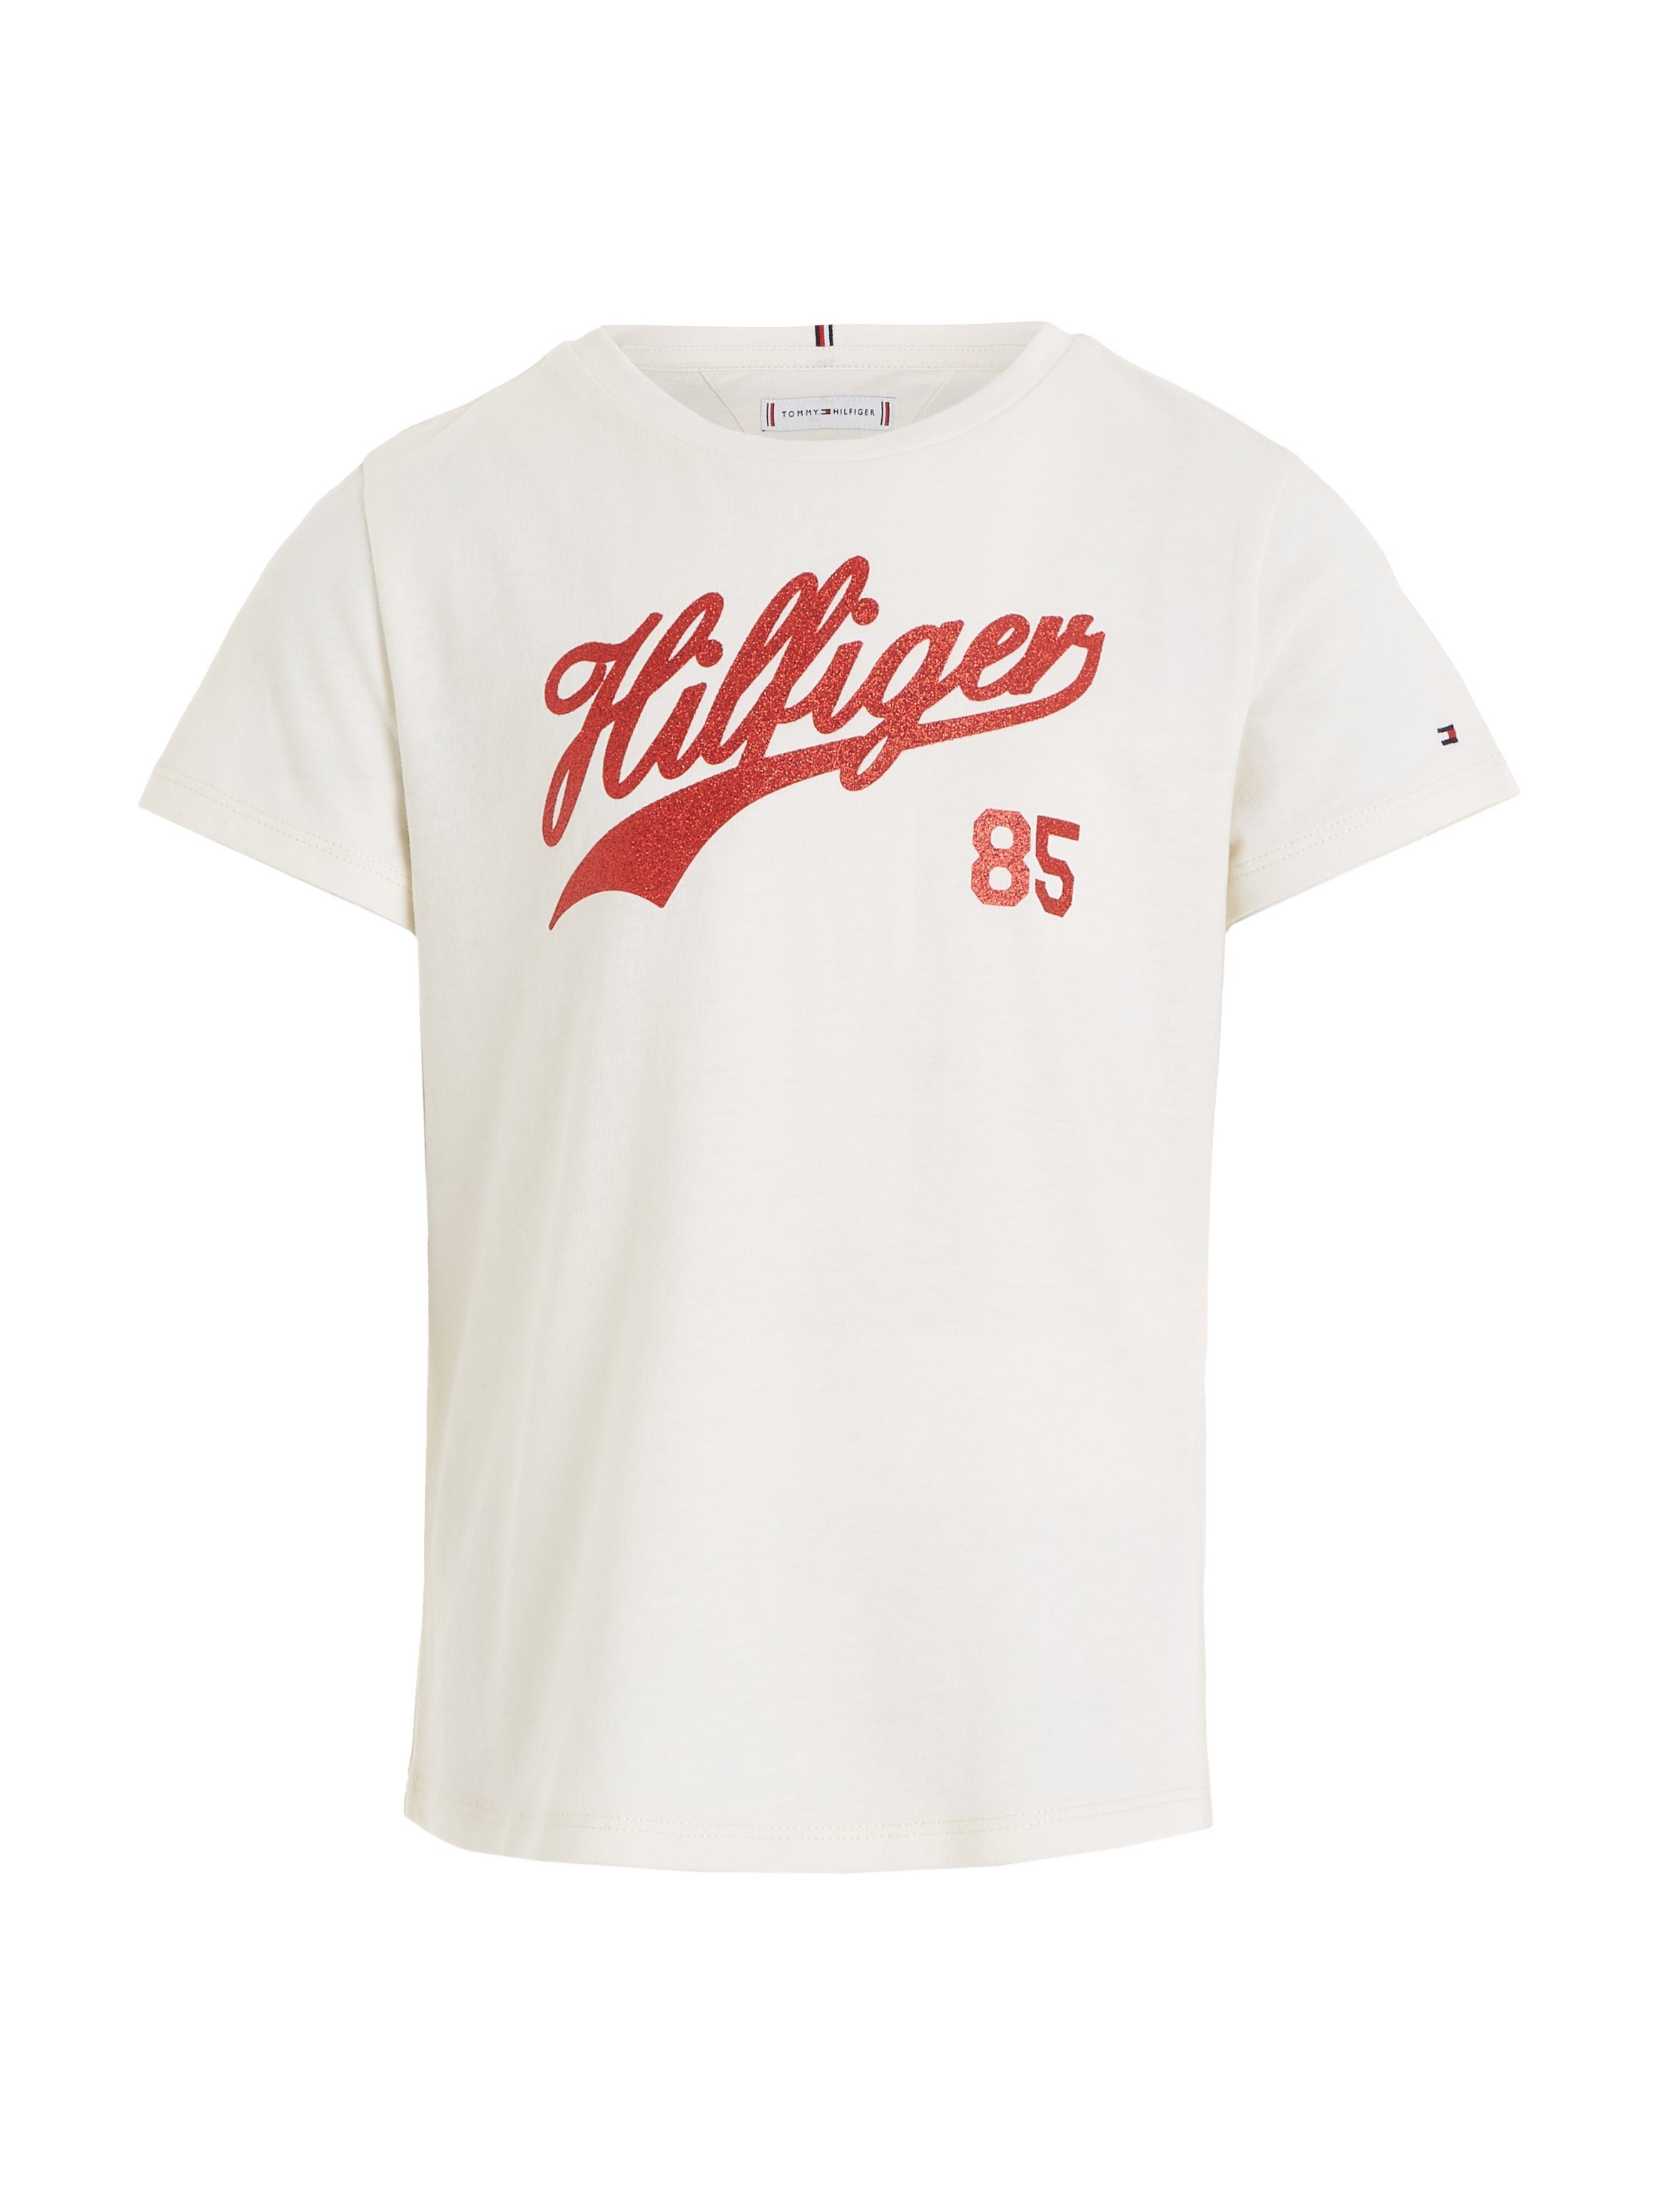 Hilfiger Logo-Print Tommy T-Shirt mit Calico SCRIPT TEE HILFIGER Hilfiger S/S